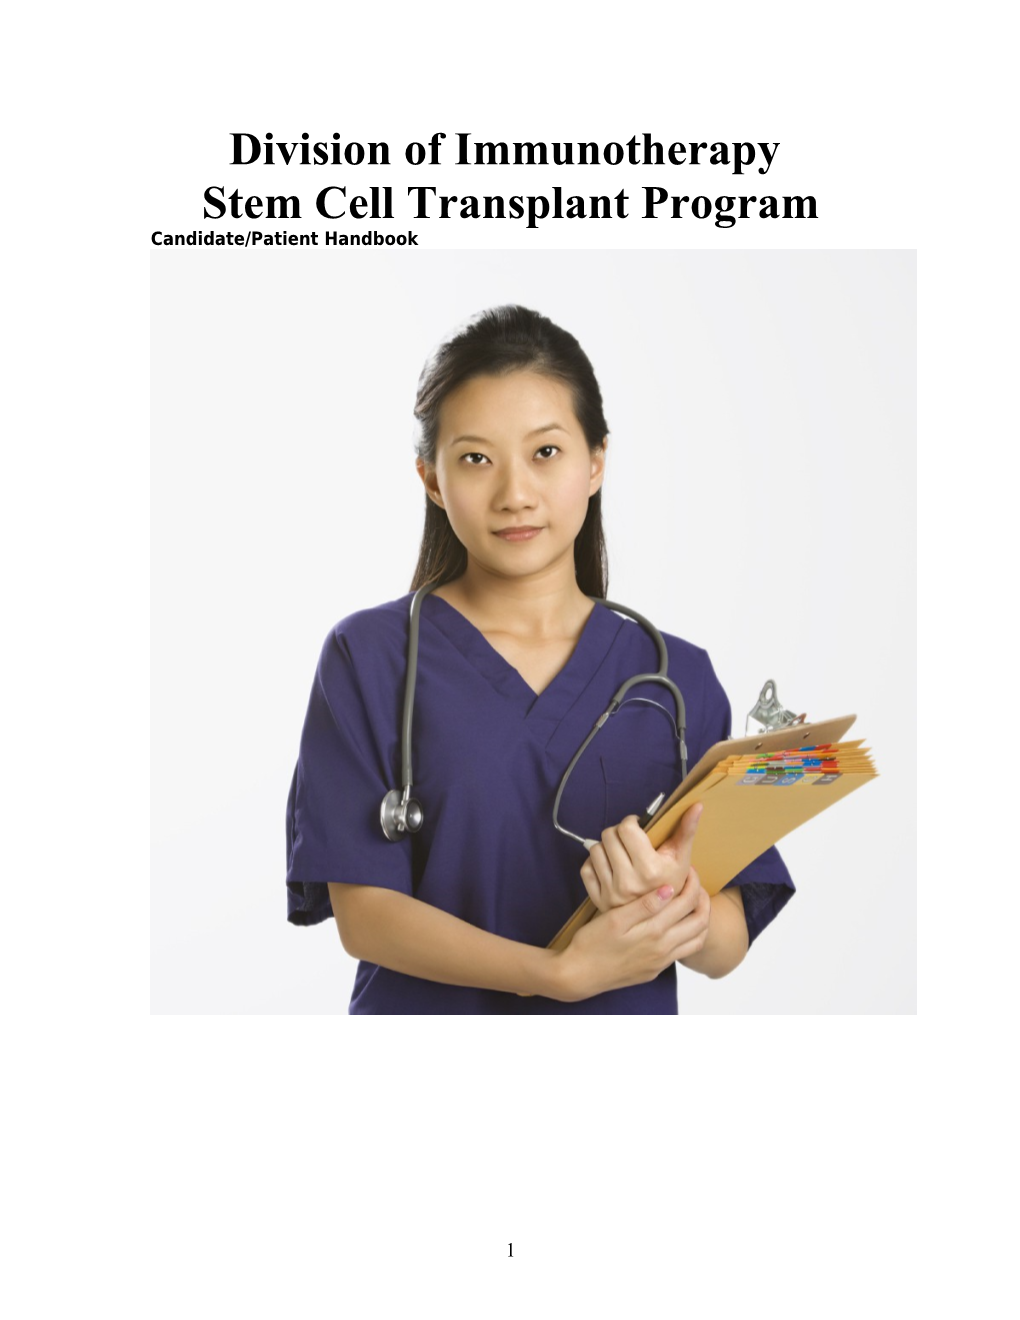 Stem Cell Transplant Program